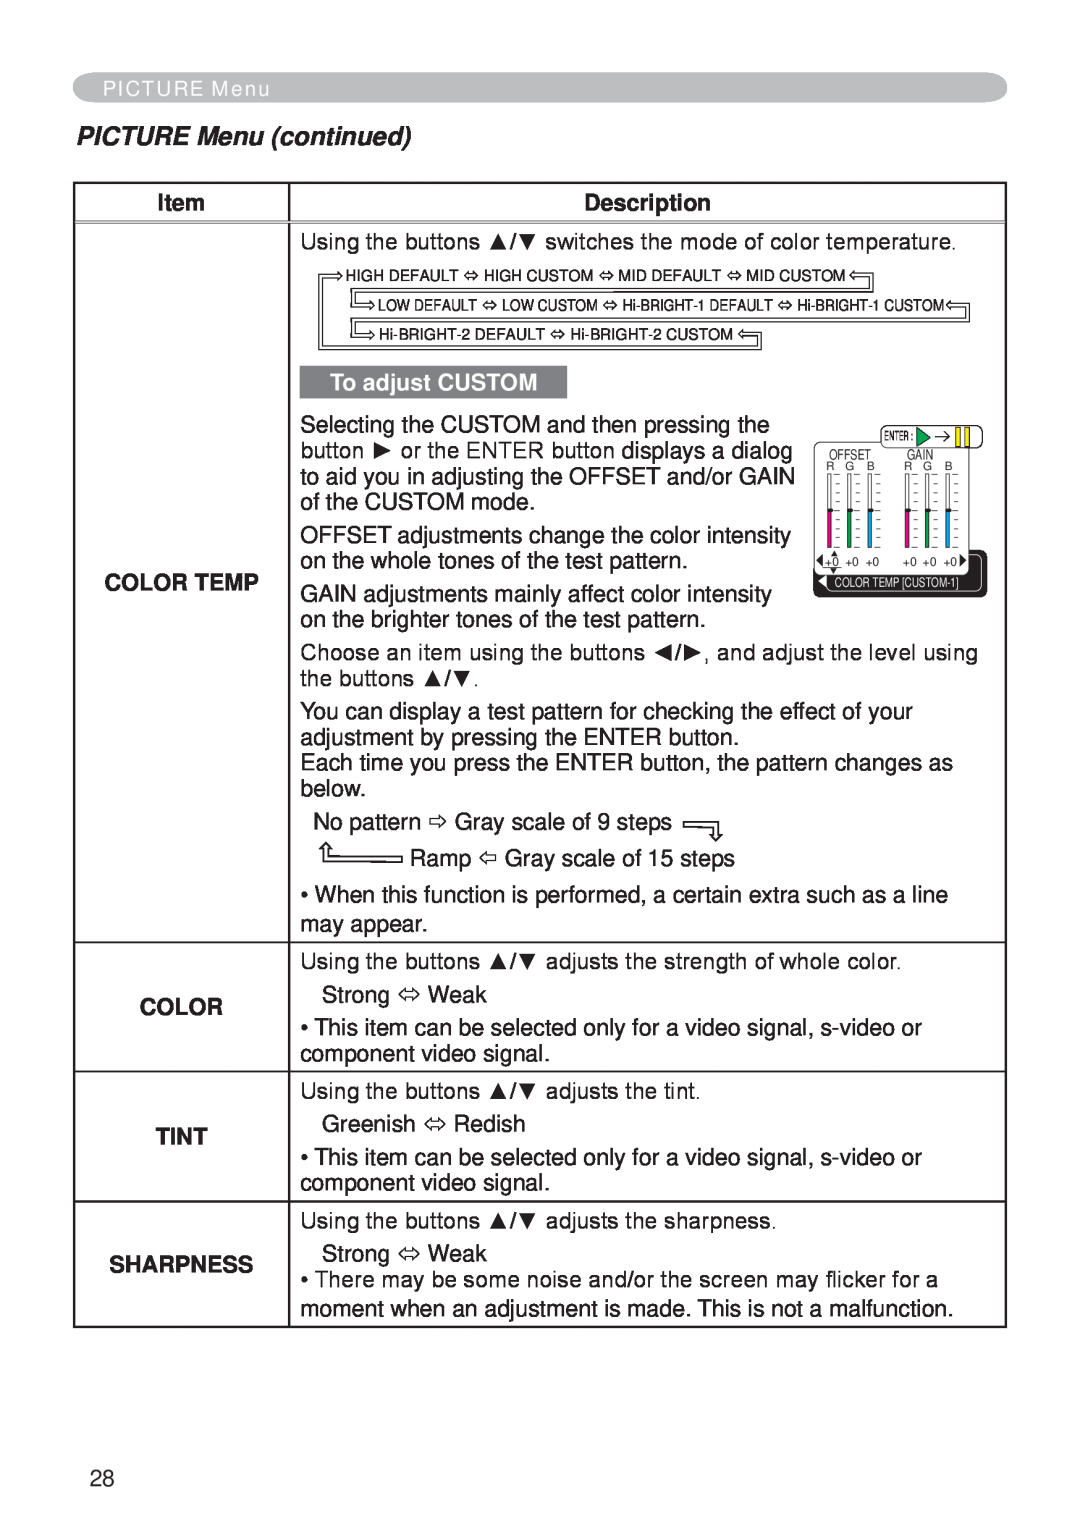 Hitachi CP-X265 user manual PICTURE Menu continued, Description, To adjust CUSTOM, Color Temp, Tint, Sharpness 